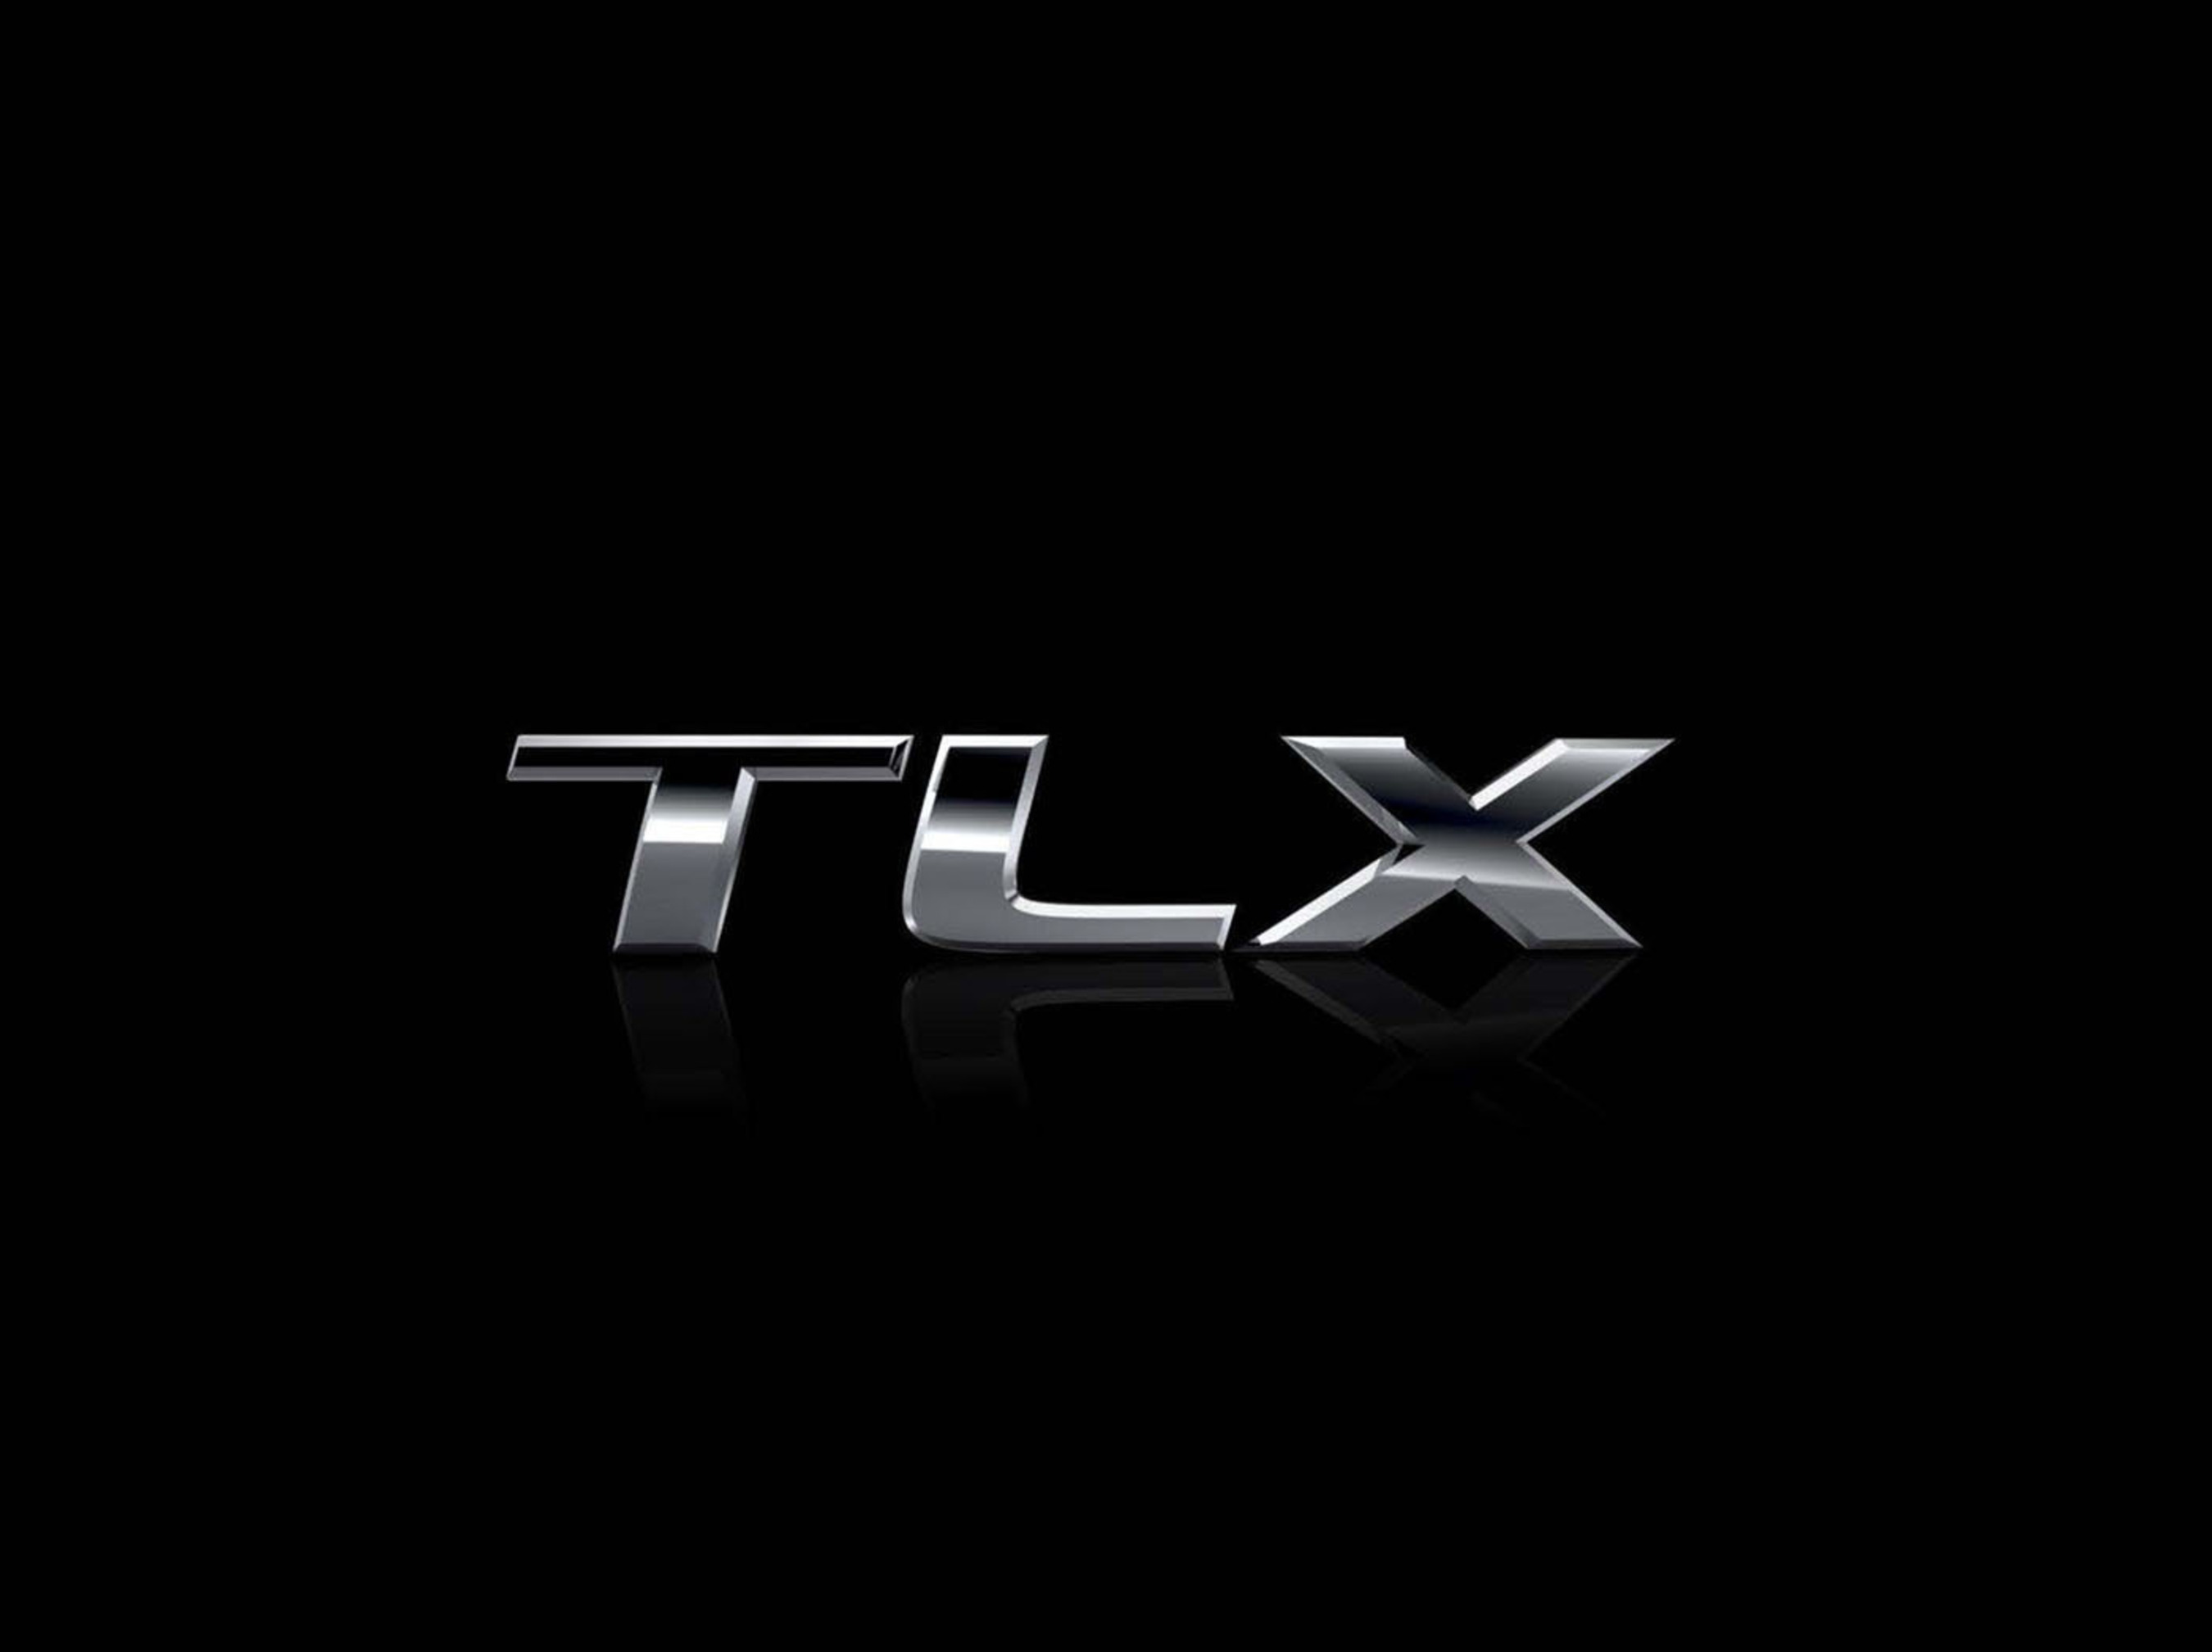 2015 Acura TLX Logo. (PRNewsFoto/Acura) (PRNewsFoto/ACURA)